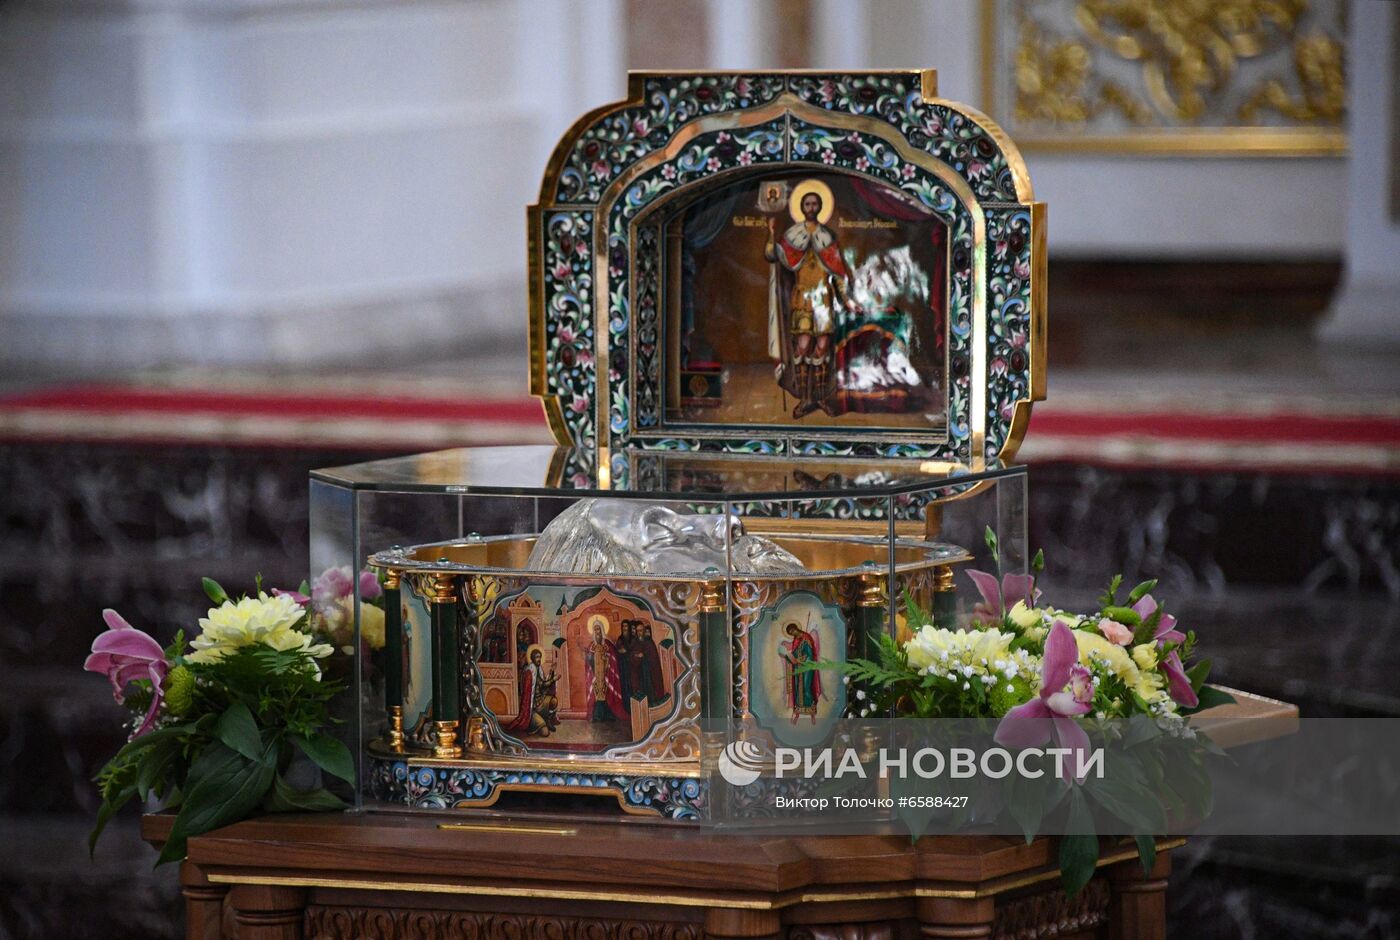 Празднование 800-летия со дня рождения князя А. Невского в Витебске